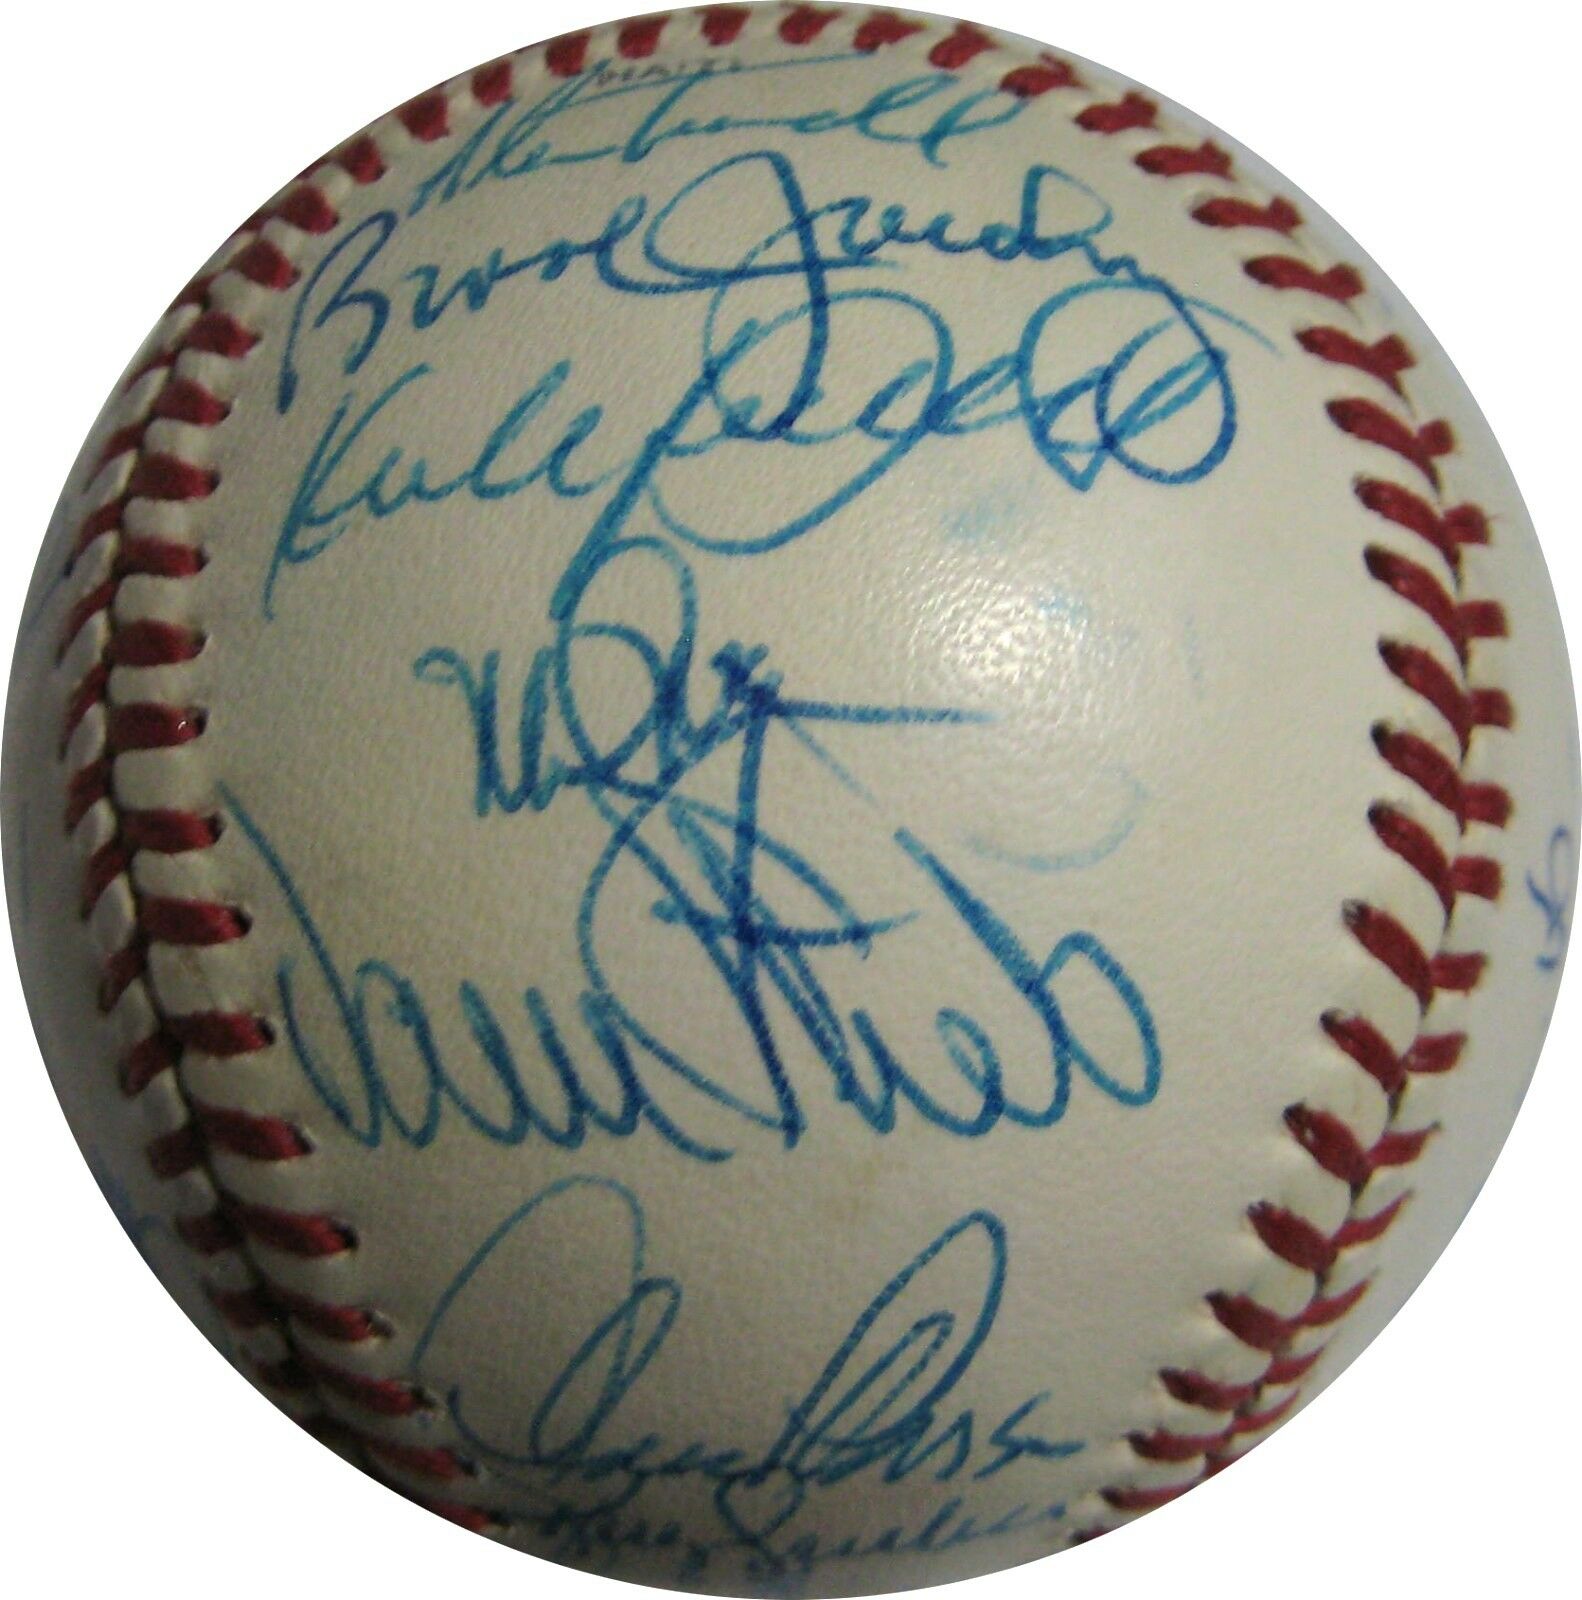 1990 A.L All Star Team Signed Baseball McGwire Kirby Puckett Clemens PSA Coa